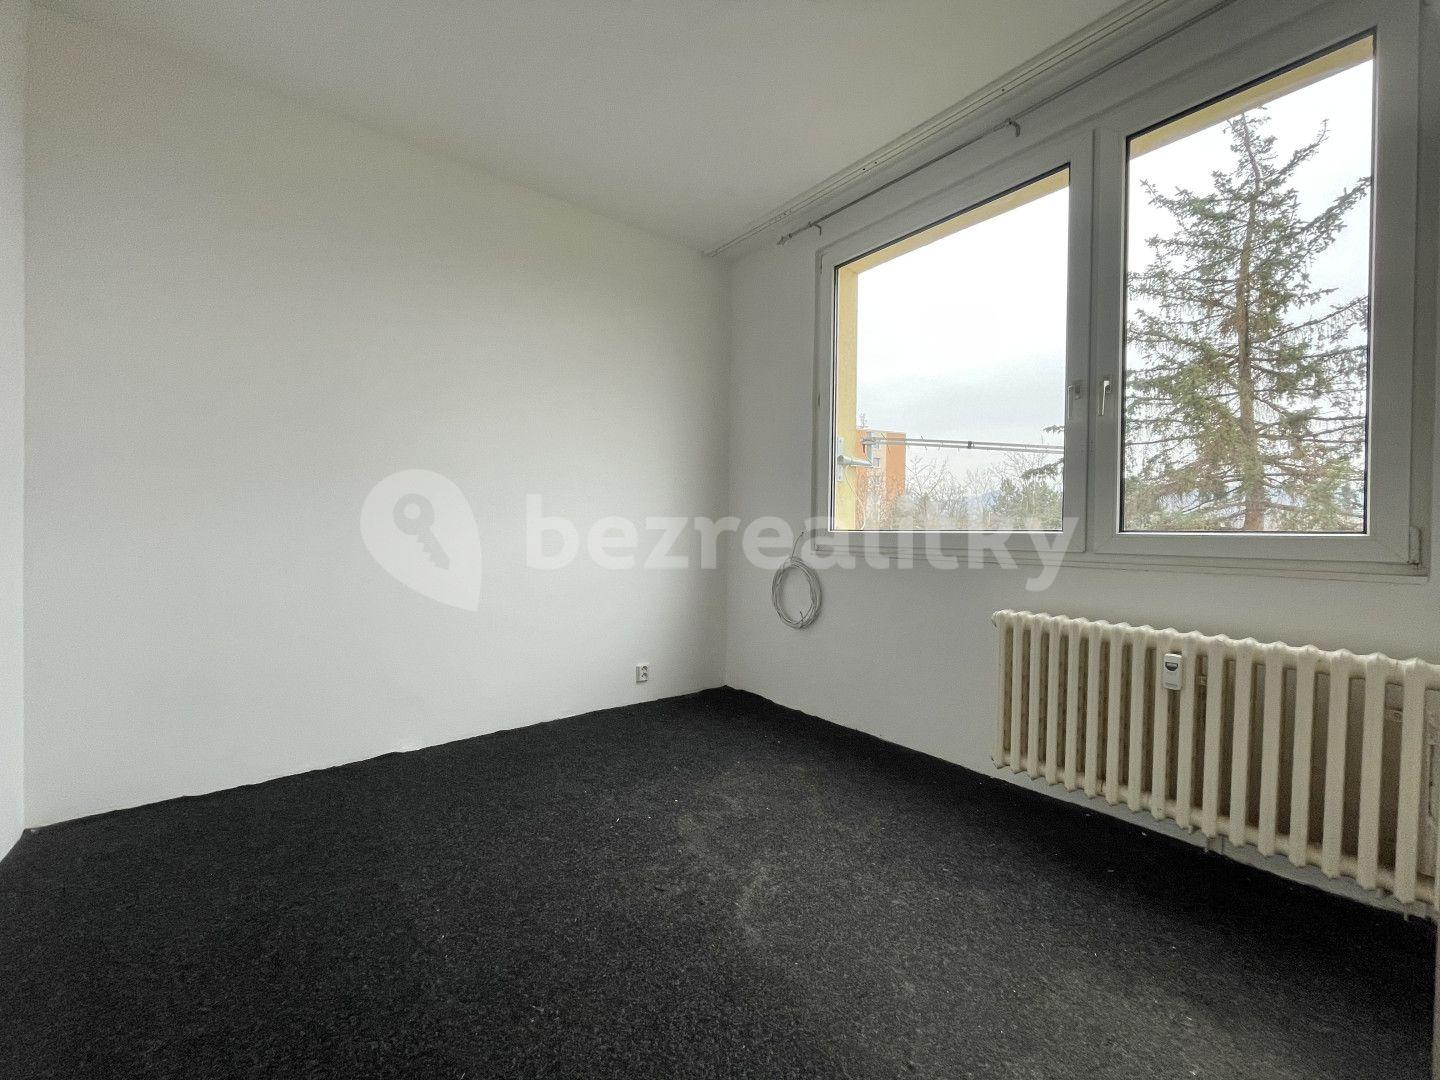 4 bedroom flat for sale, 75 m², Jirkovská, Chomutov, Ústecký Region